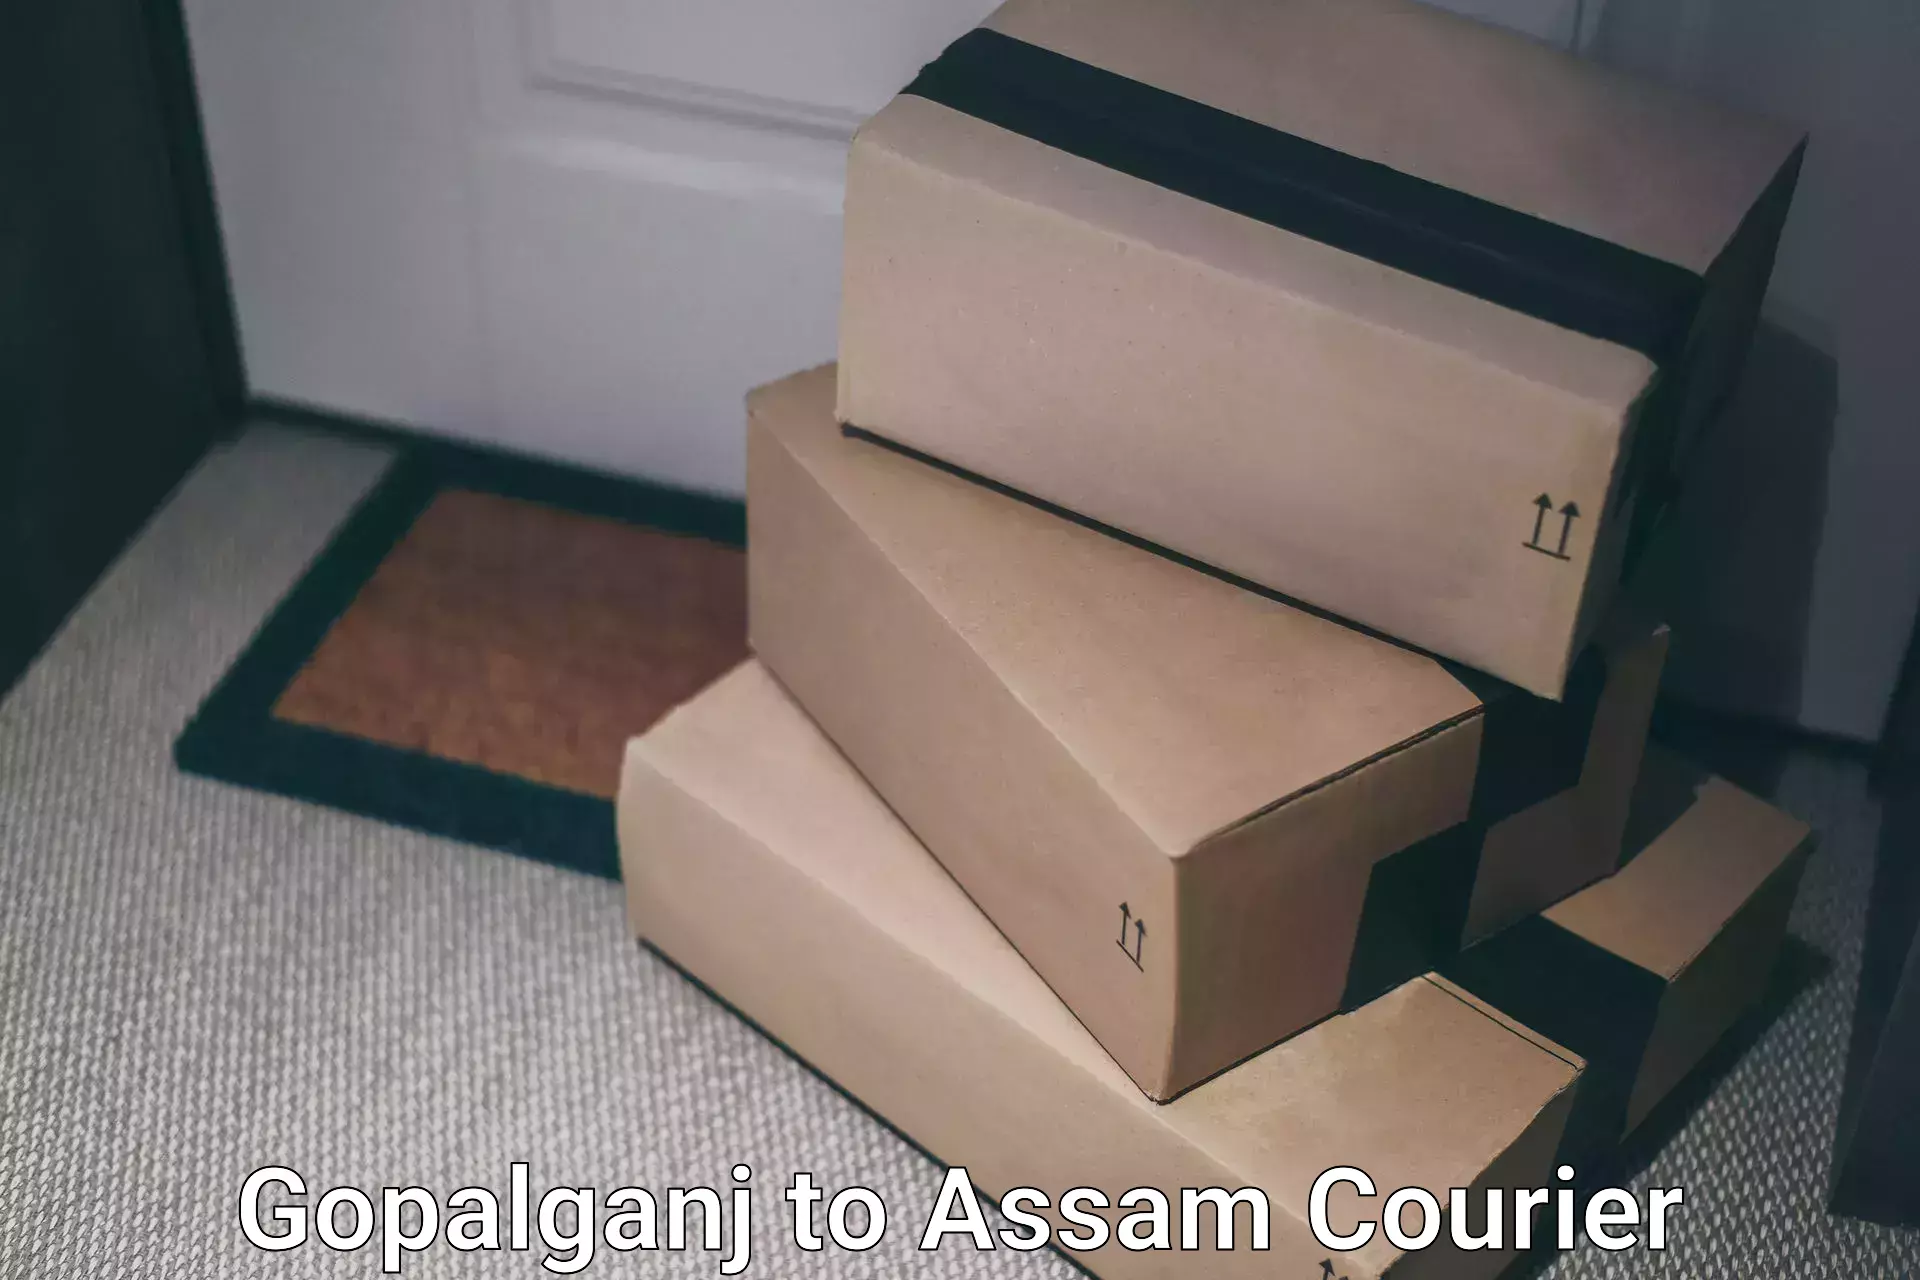 Express logistics providers Gopalganj to Assam